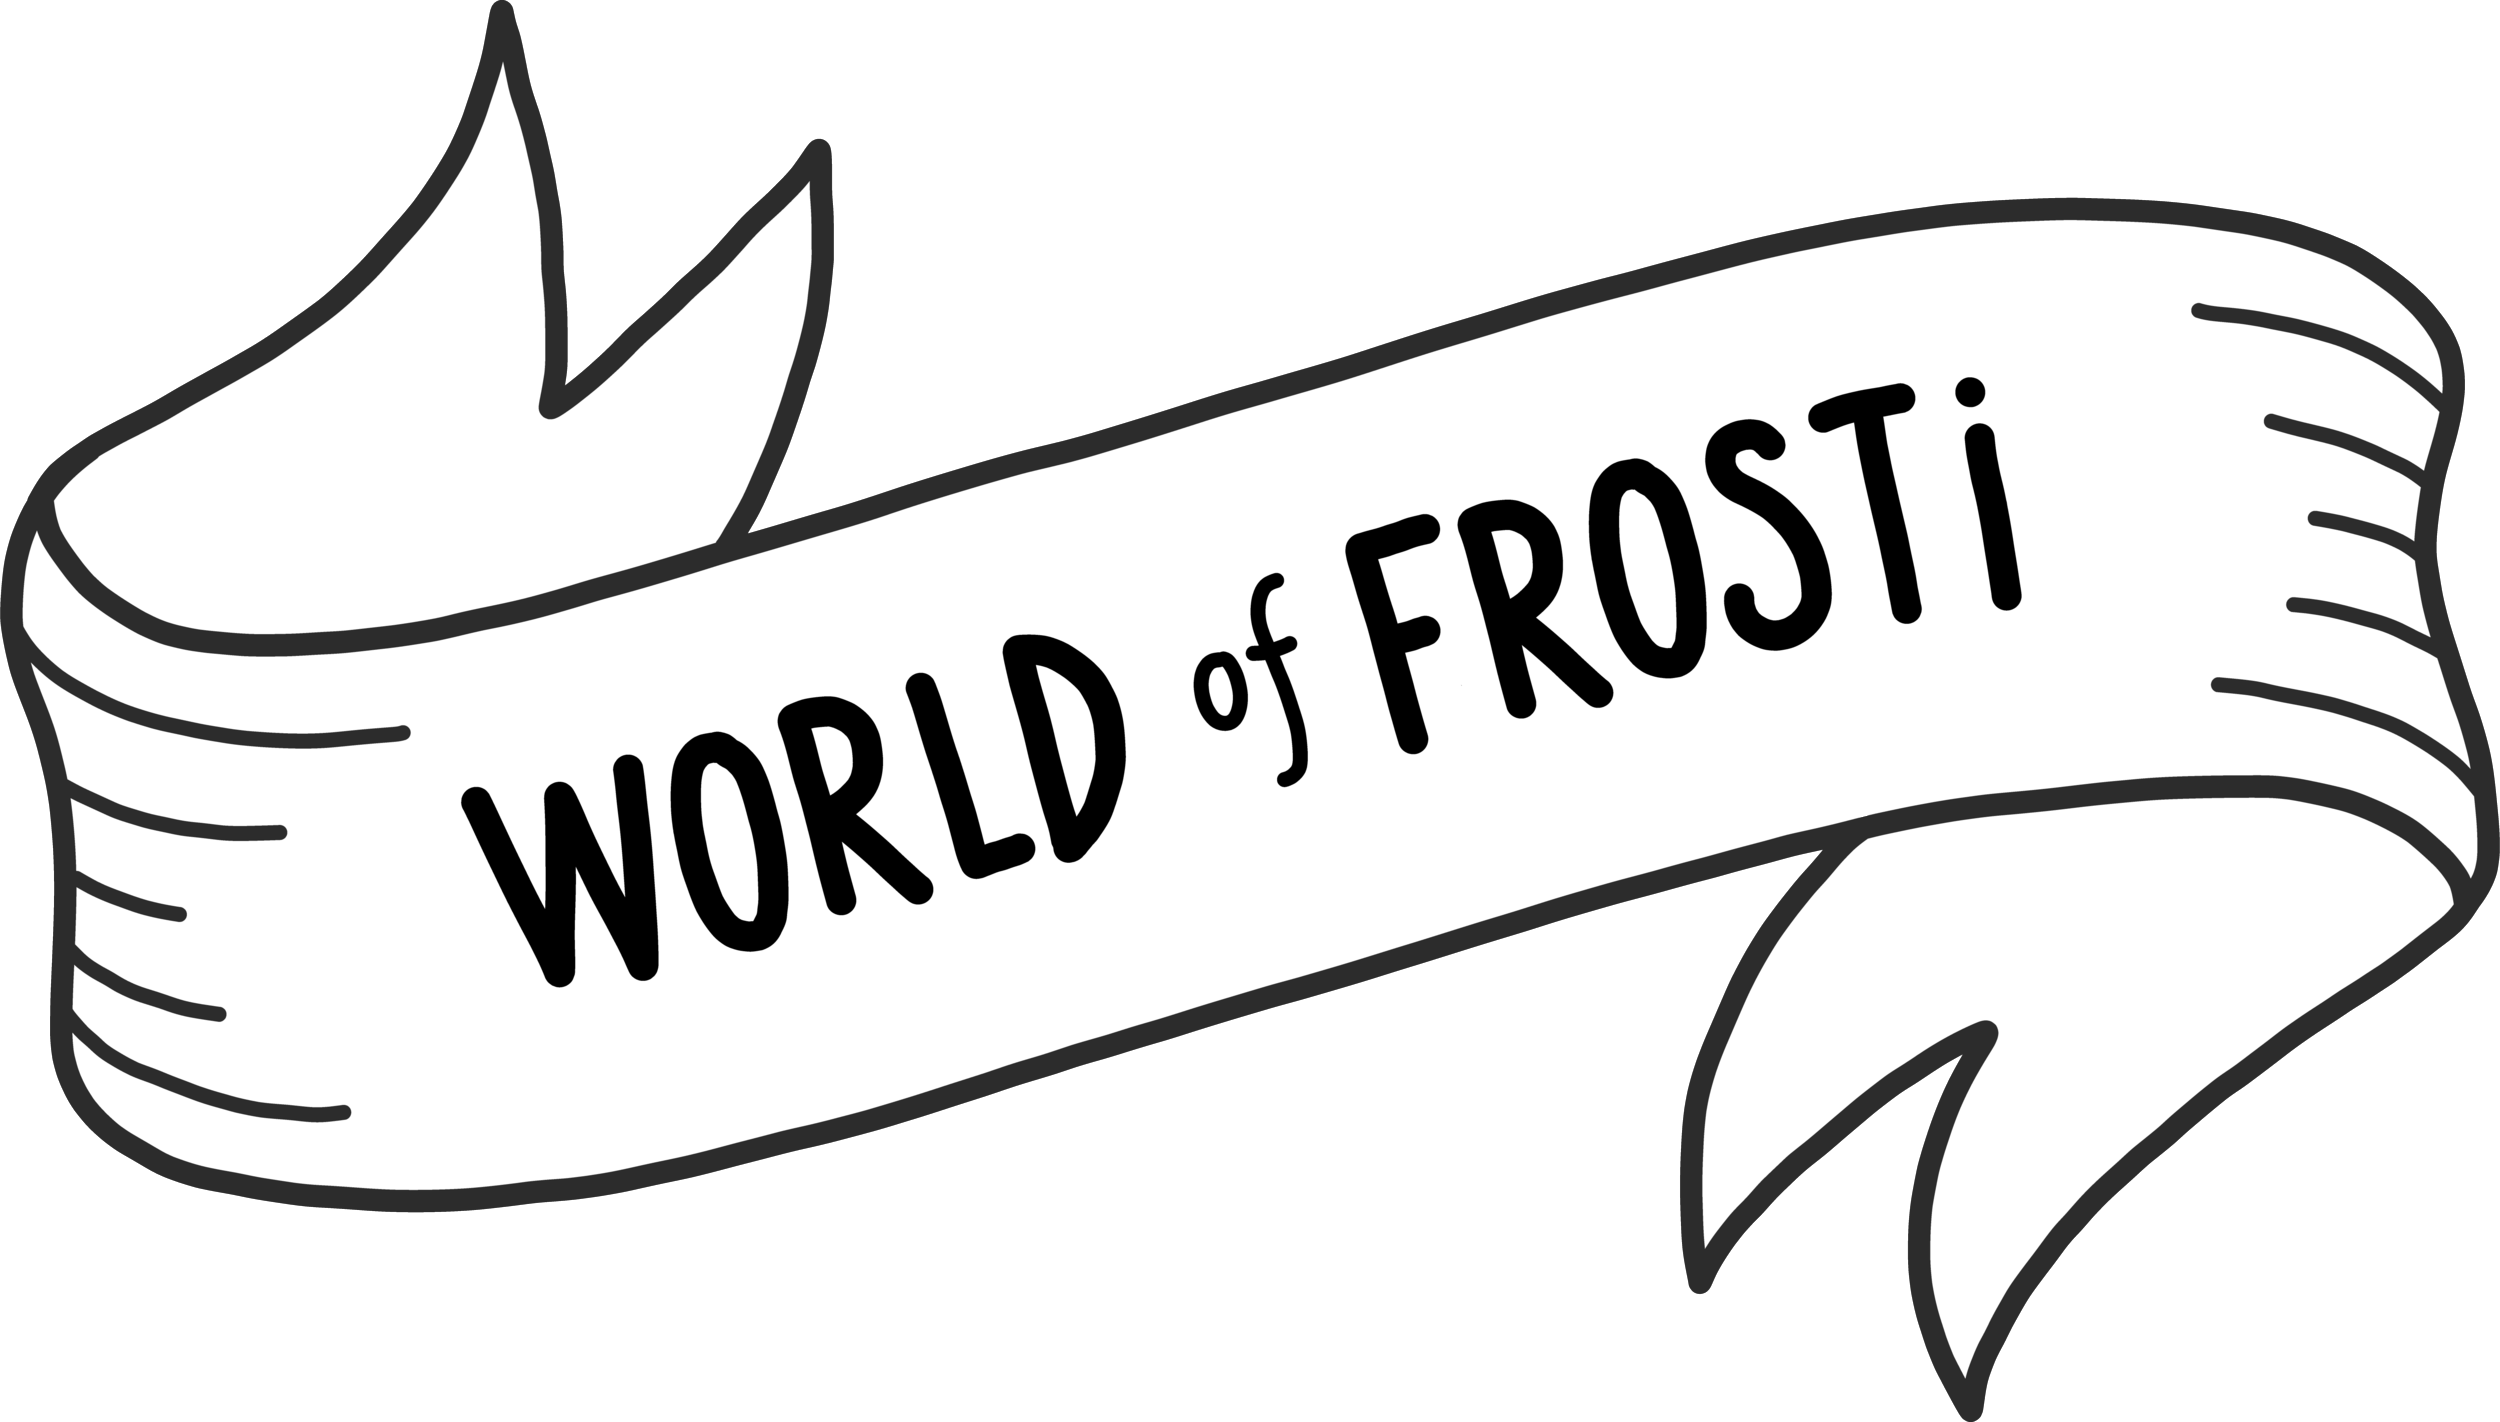 World of Frosti